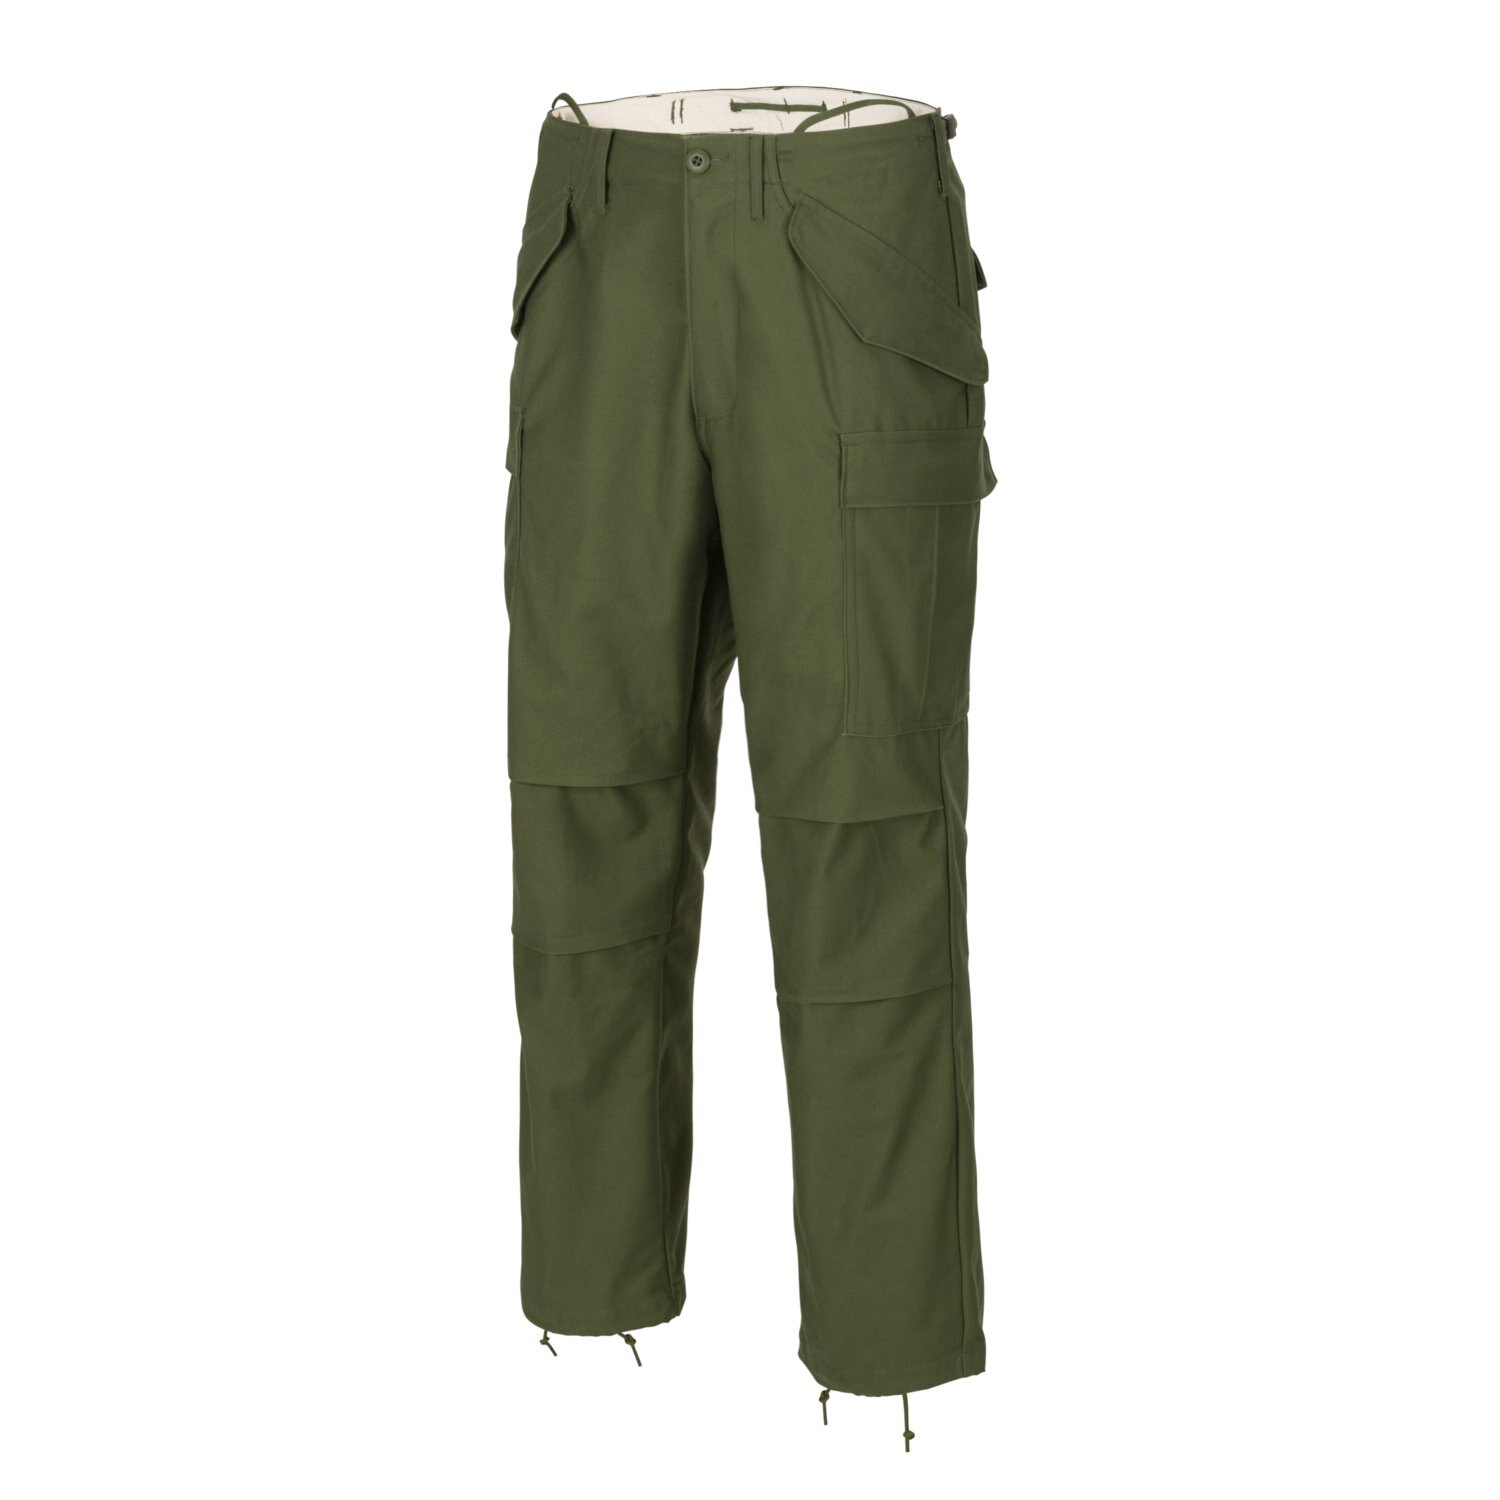 Kalhoty M65 Helikon-Tex® - oliv (Barva: Olive Green, Velikost: M)